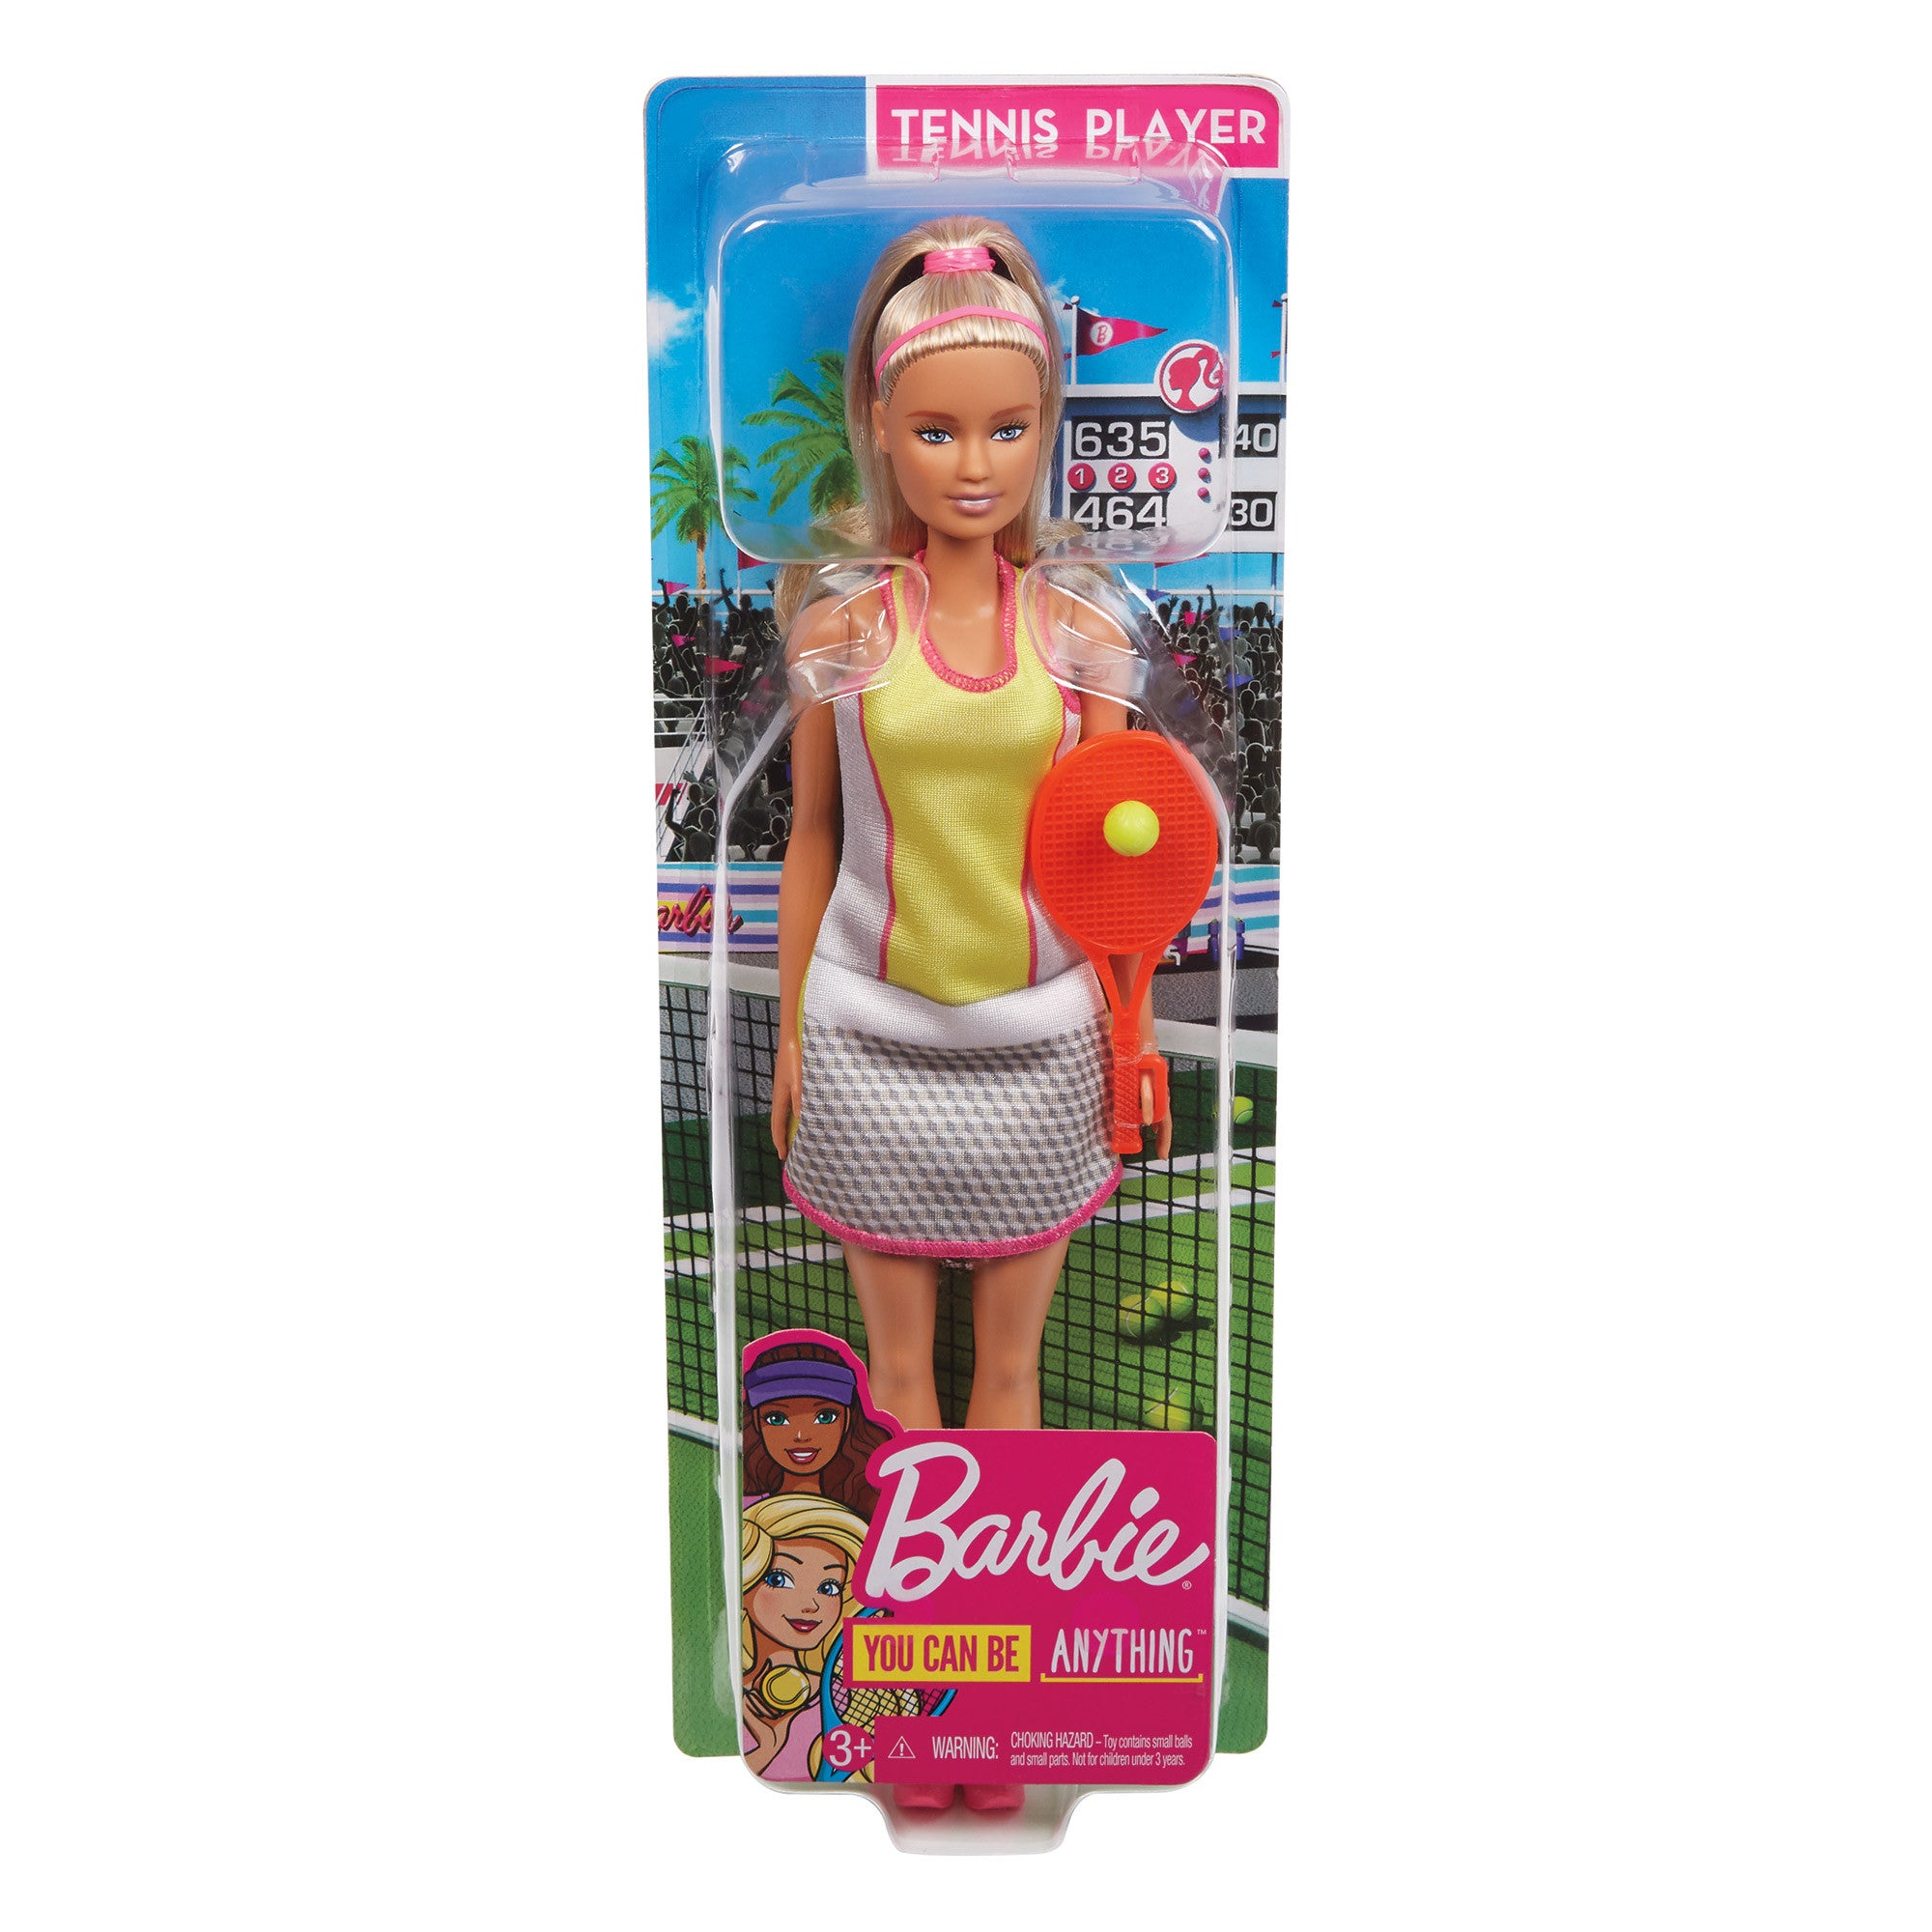 Barbie: Tennis Player